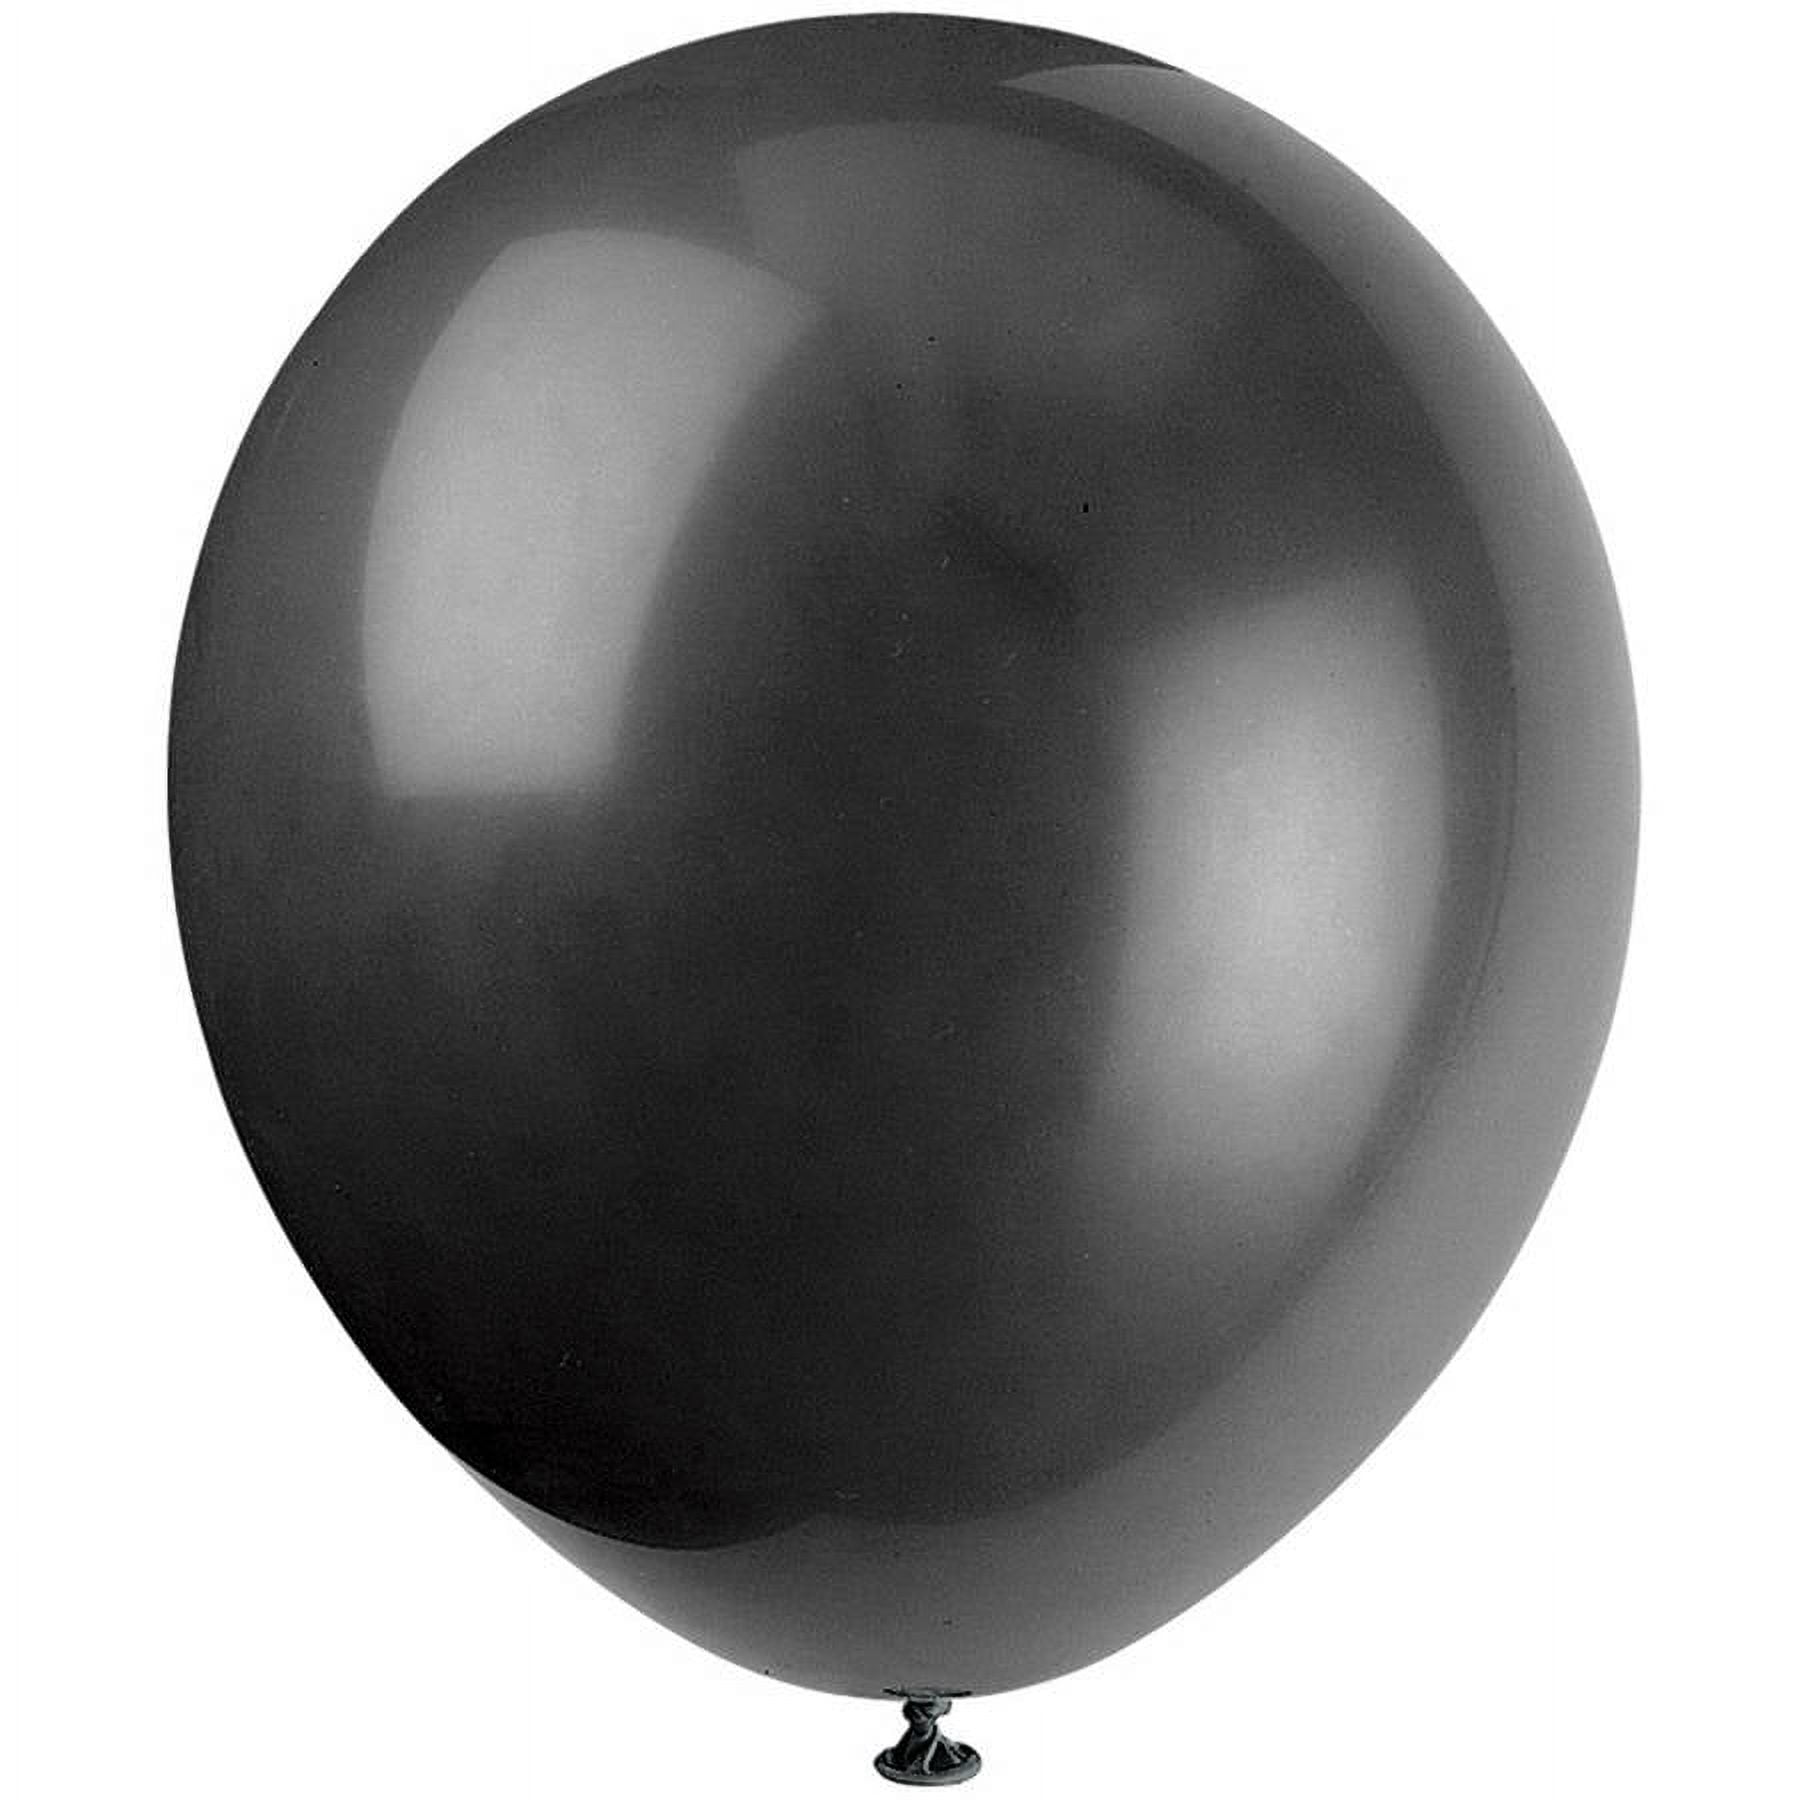 10 Pièces/1set Ballon En Latex Repose L'attache De Ballon Portatif, Repose  En Plastique, 40cm